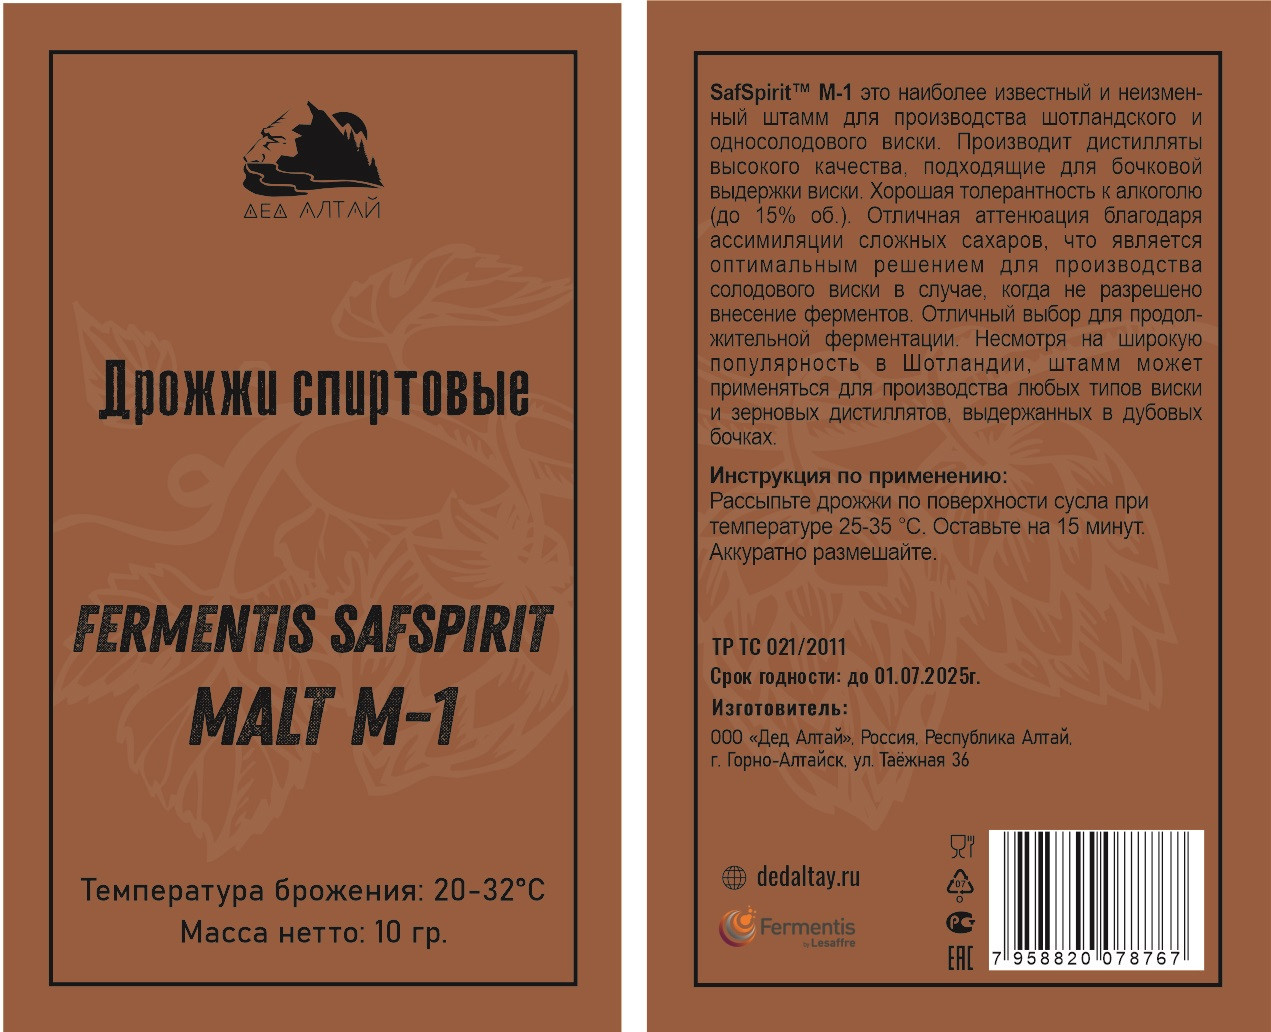 Дрожжи спиртовые "Fermentis SAFSPIRIT MALT M-1" (Дед Алтай)